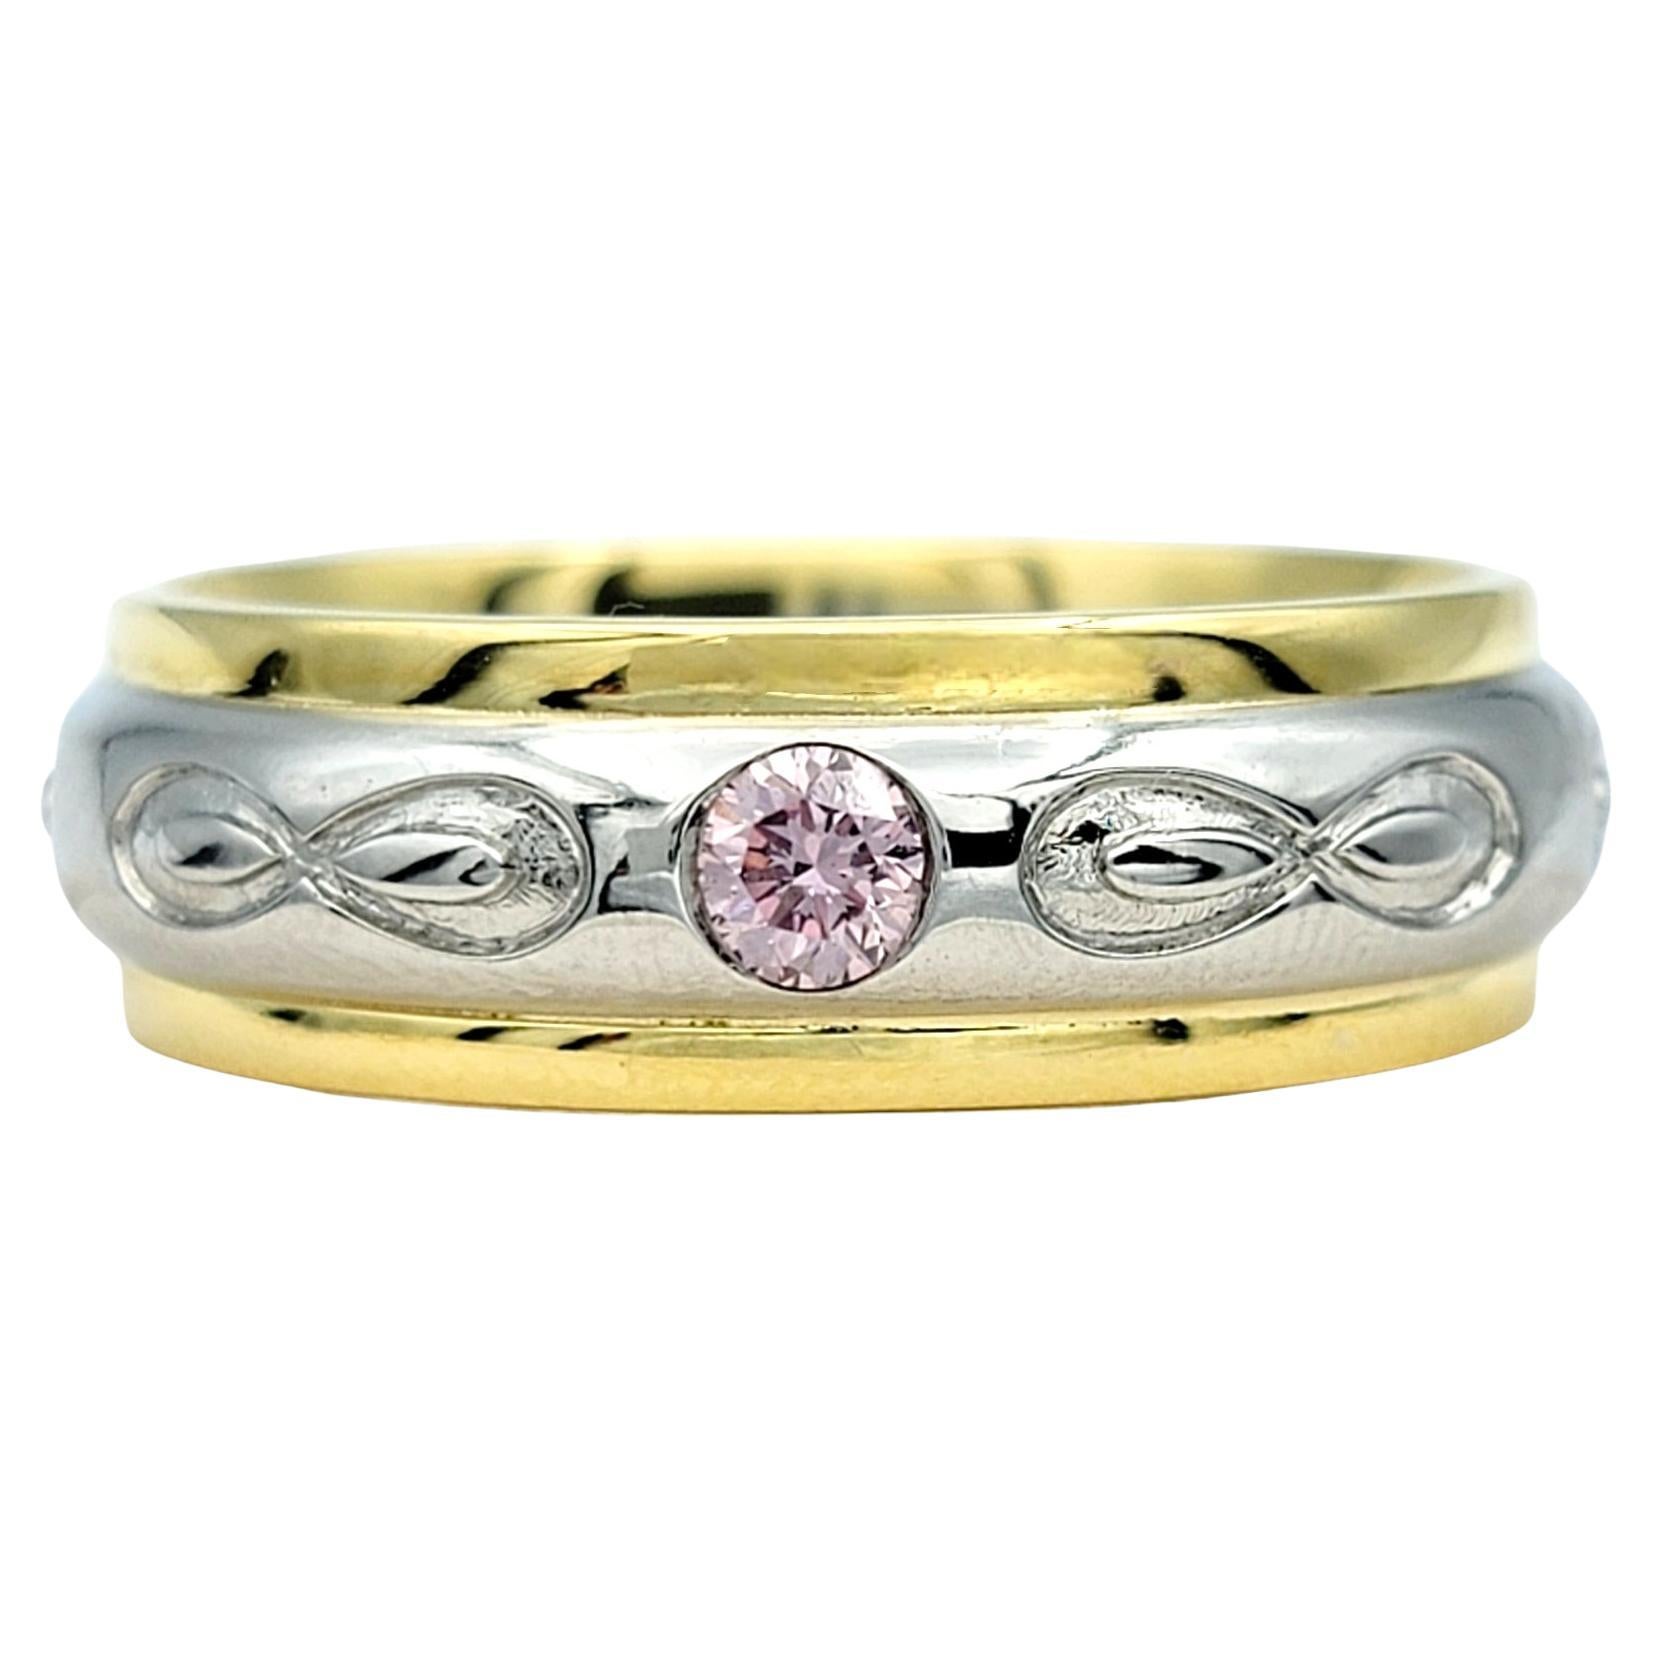 Round Brilliant Pink Diamond Band Ring Set in 18 Karat Yellow Gold and Platinum